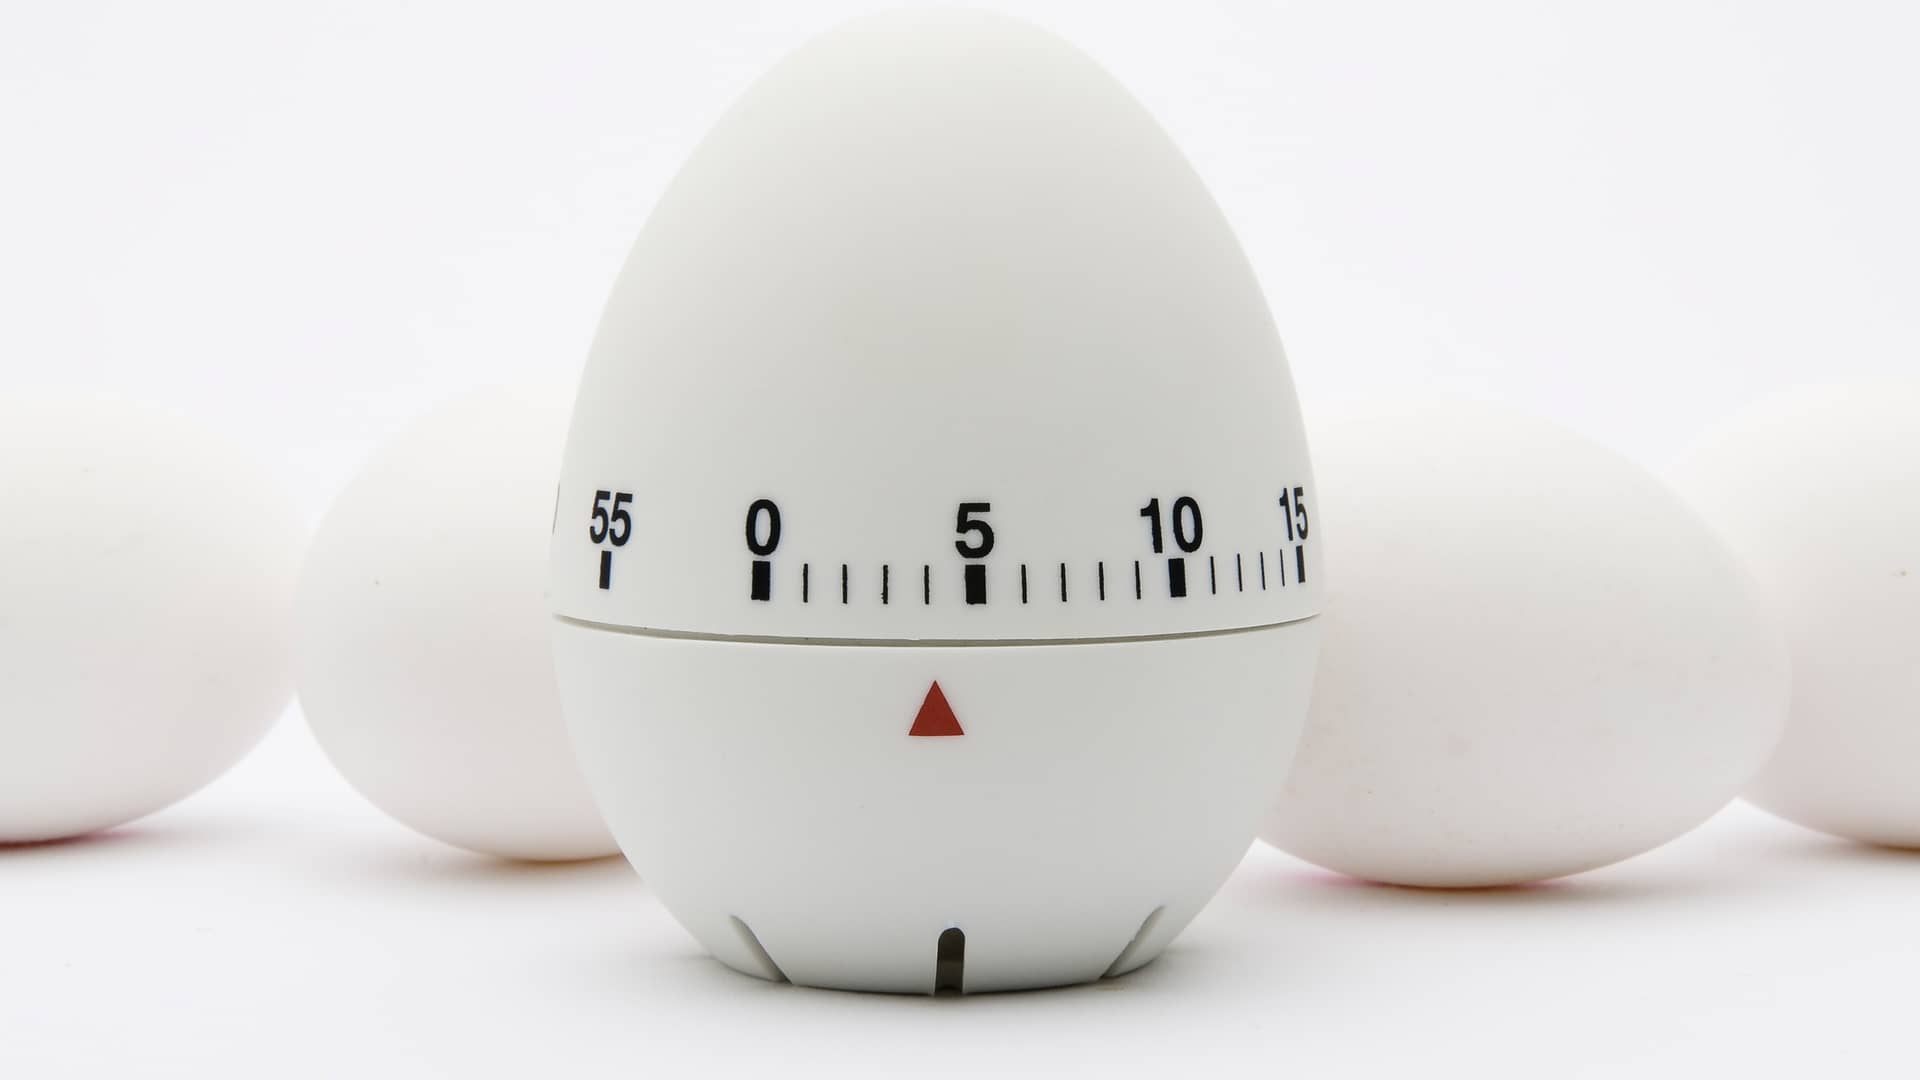 Reloj de cocina con temporizador de 5 minutos simboliza préstamo rápido en 5 minutos